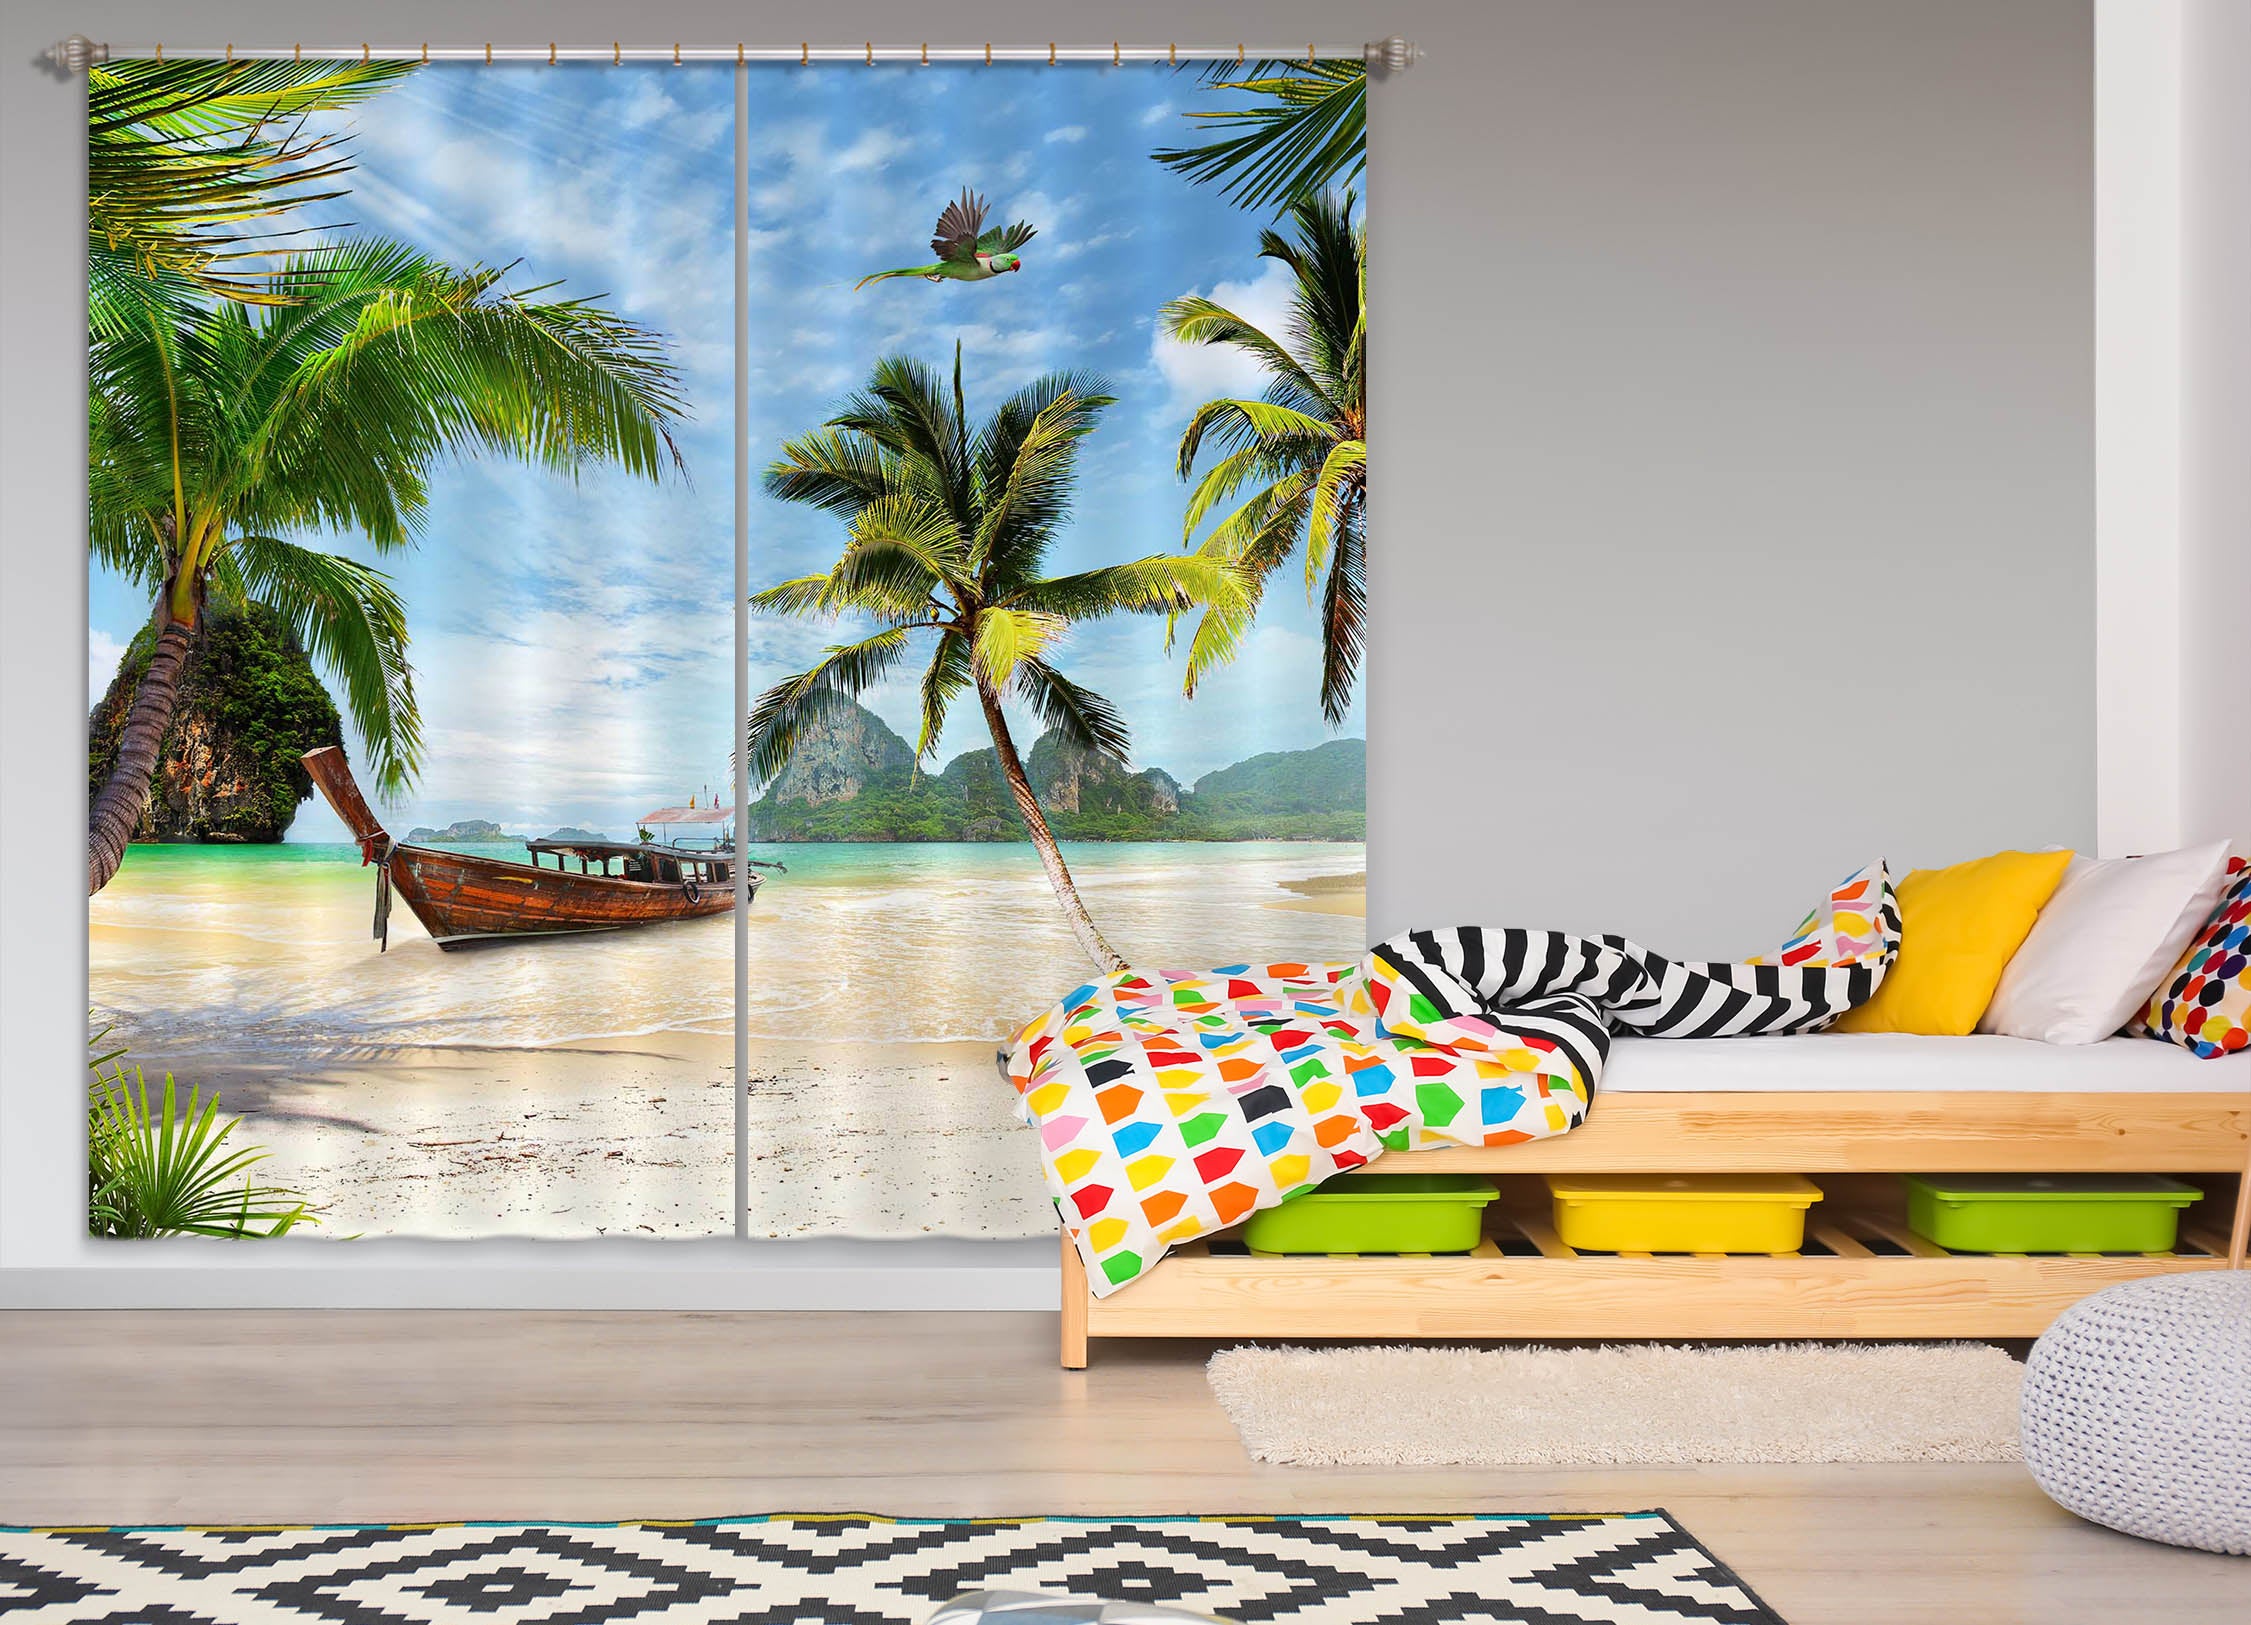 3D Coconut Palm Tree 814 Curtains Drapes